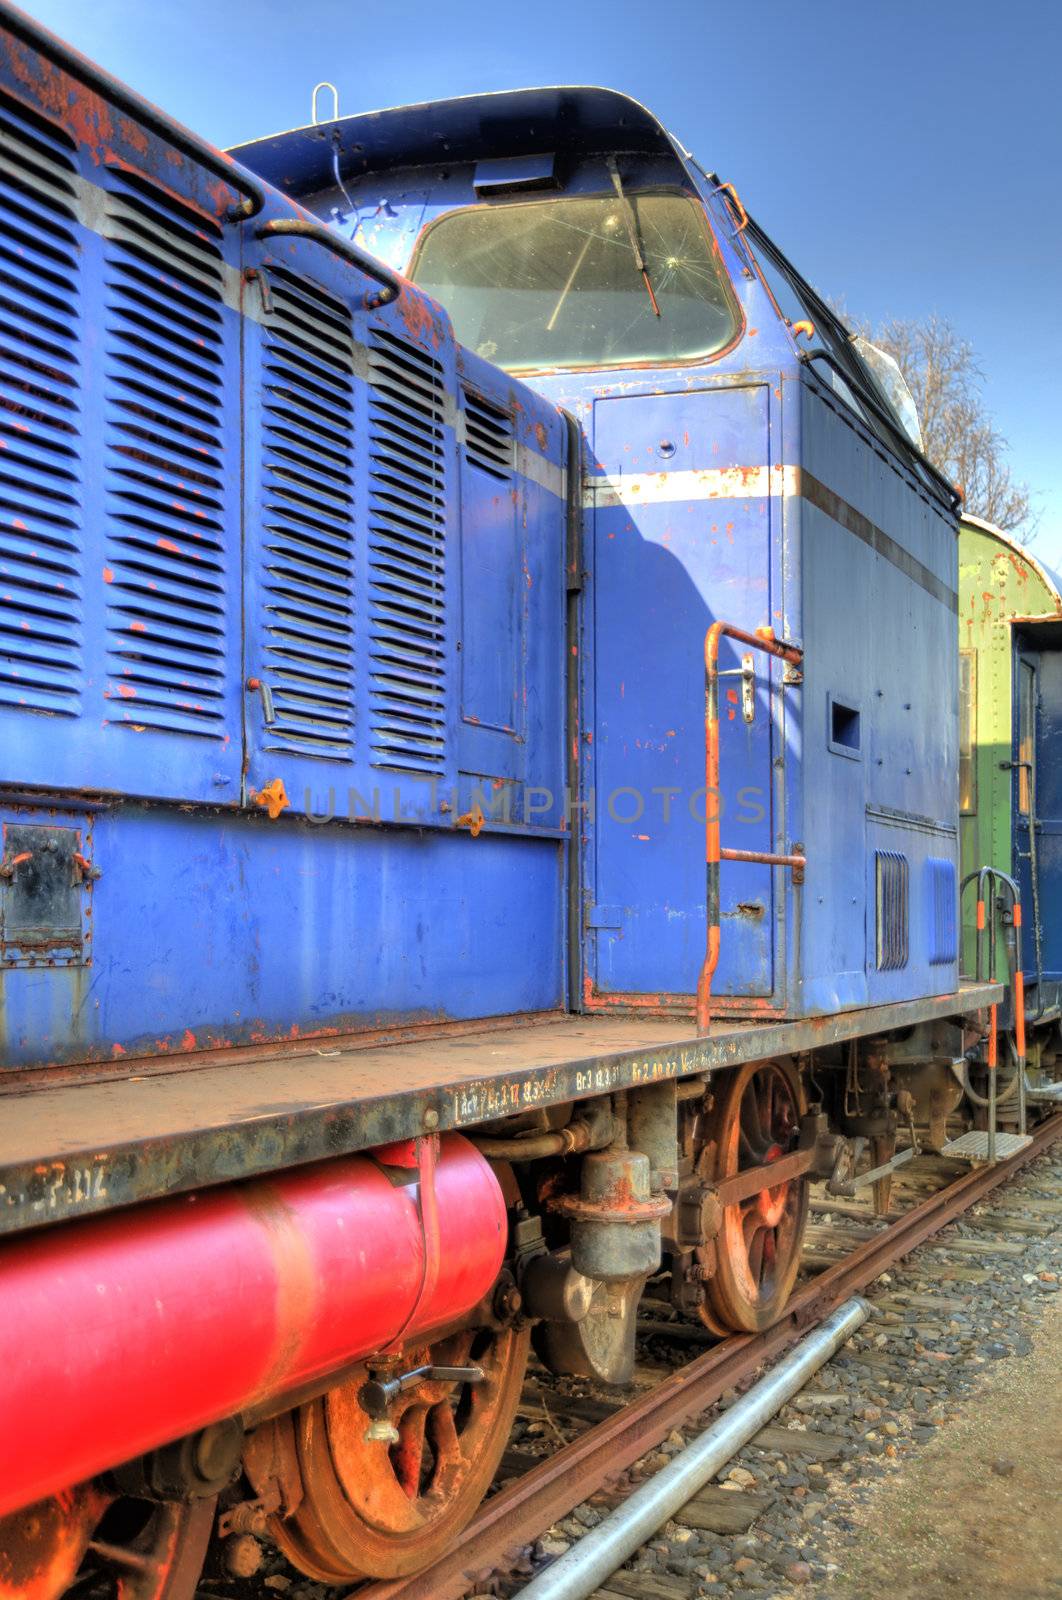 Old Locomotive HDR